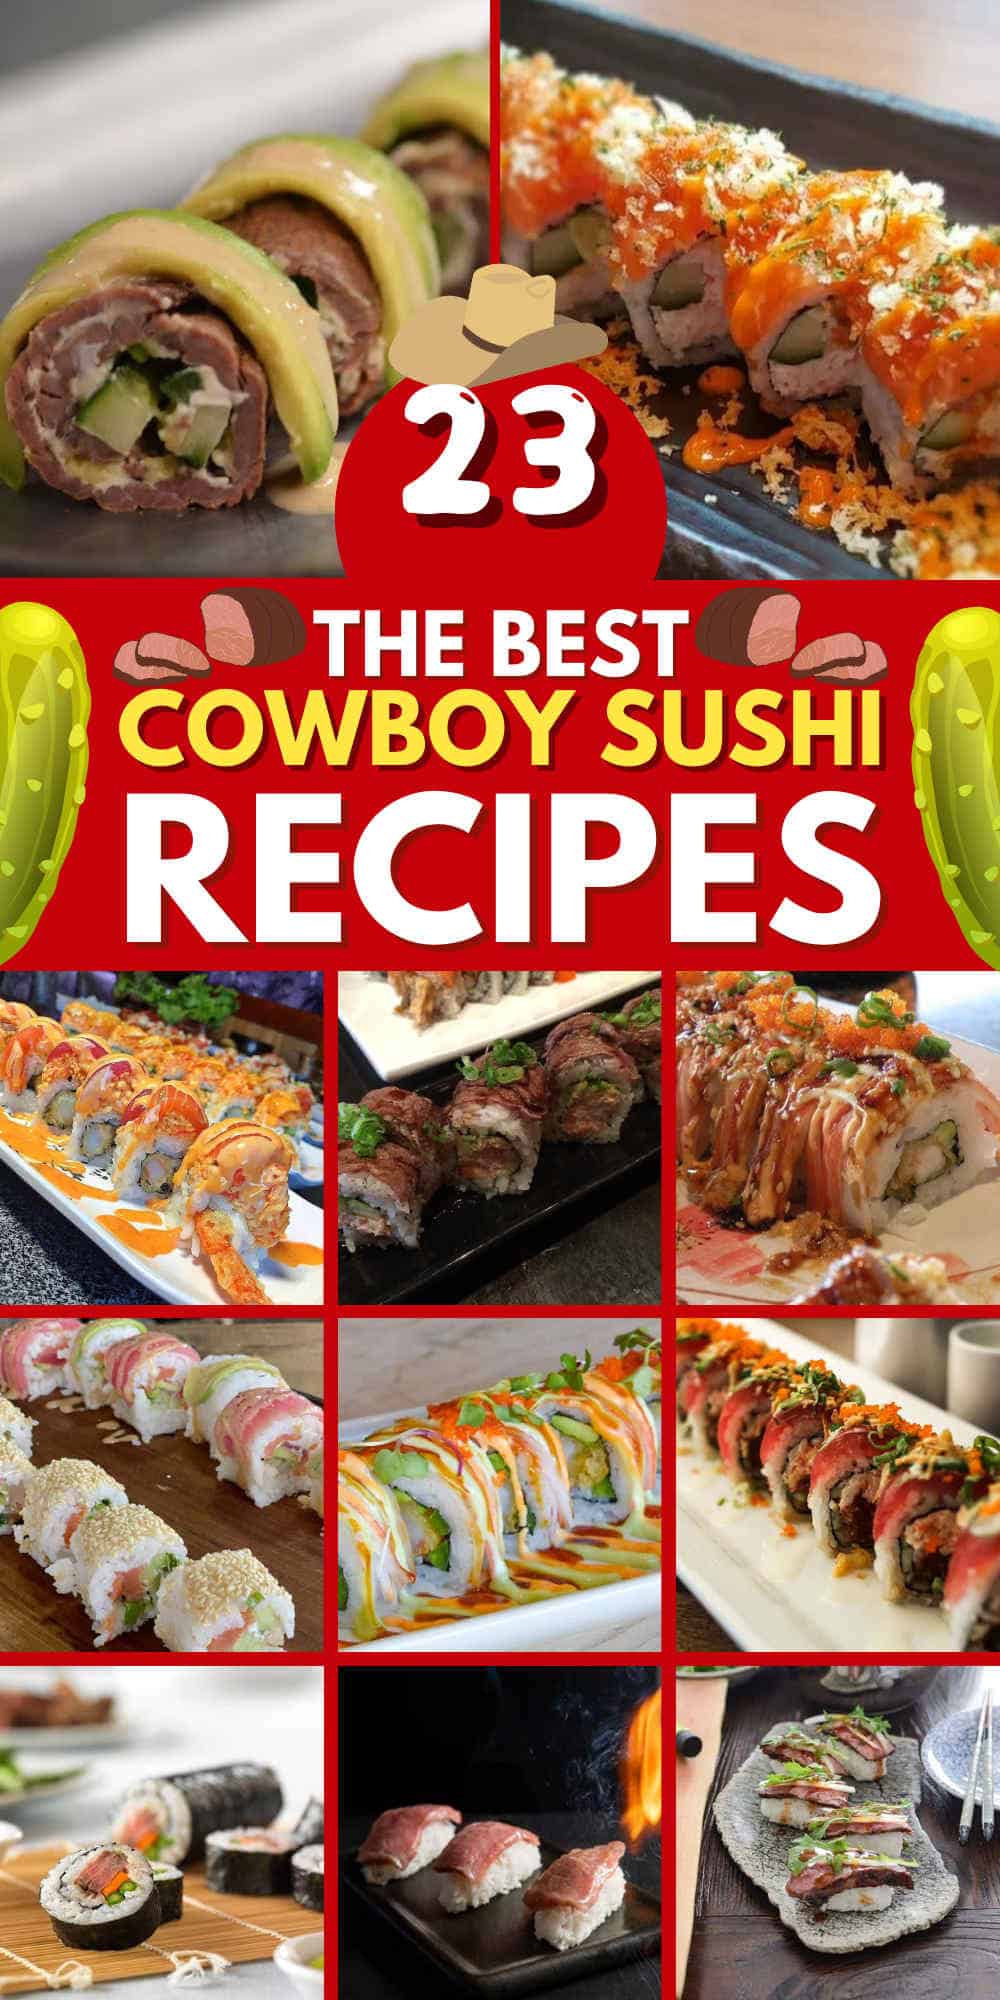 cowboy sushi recipes